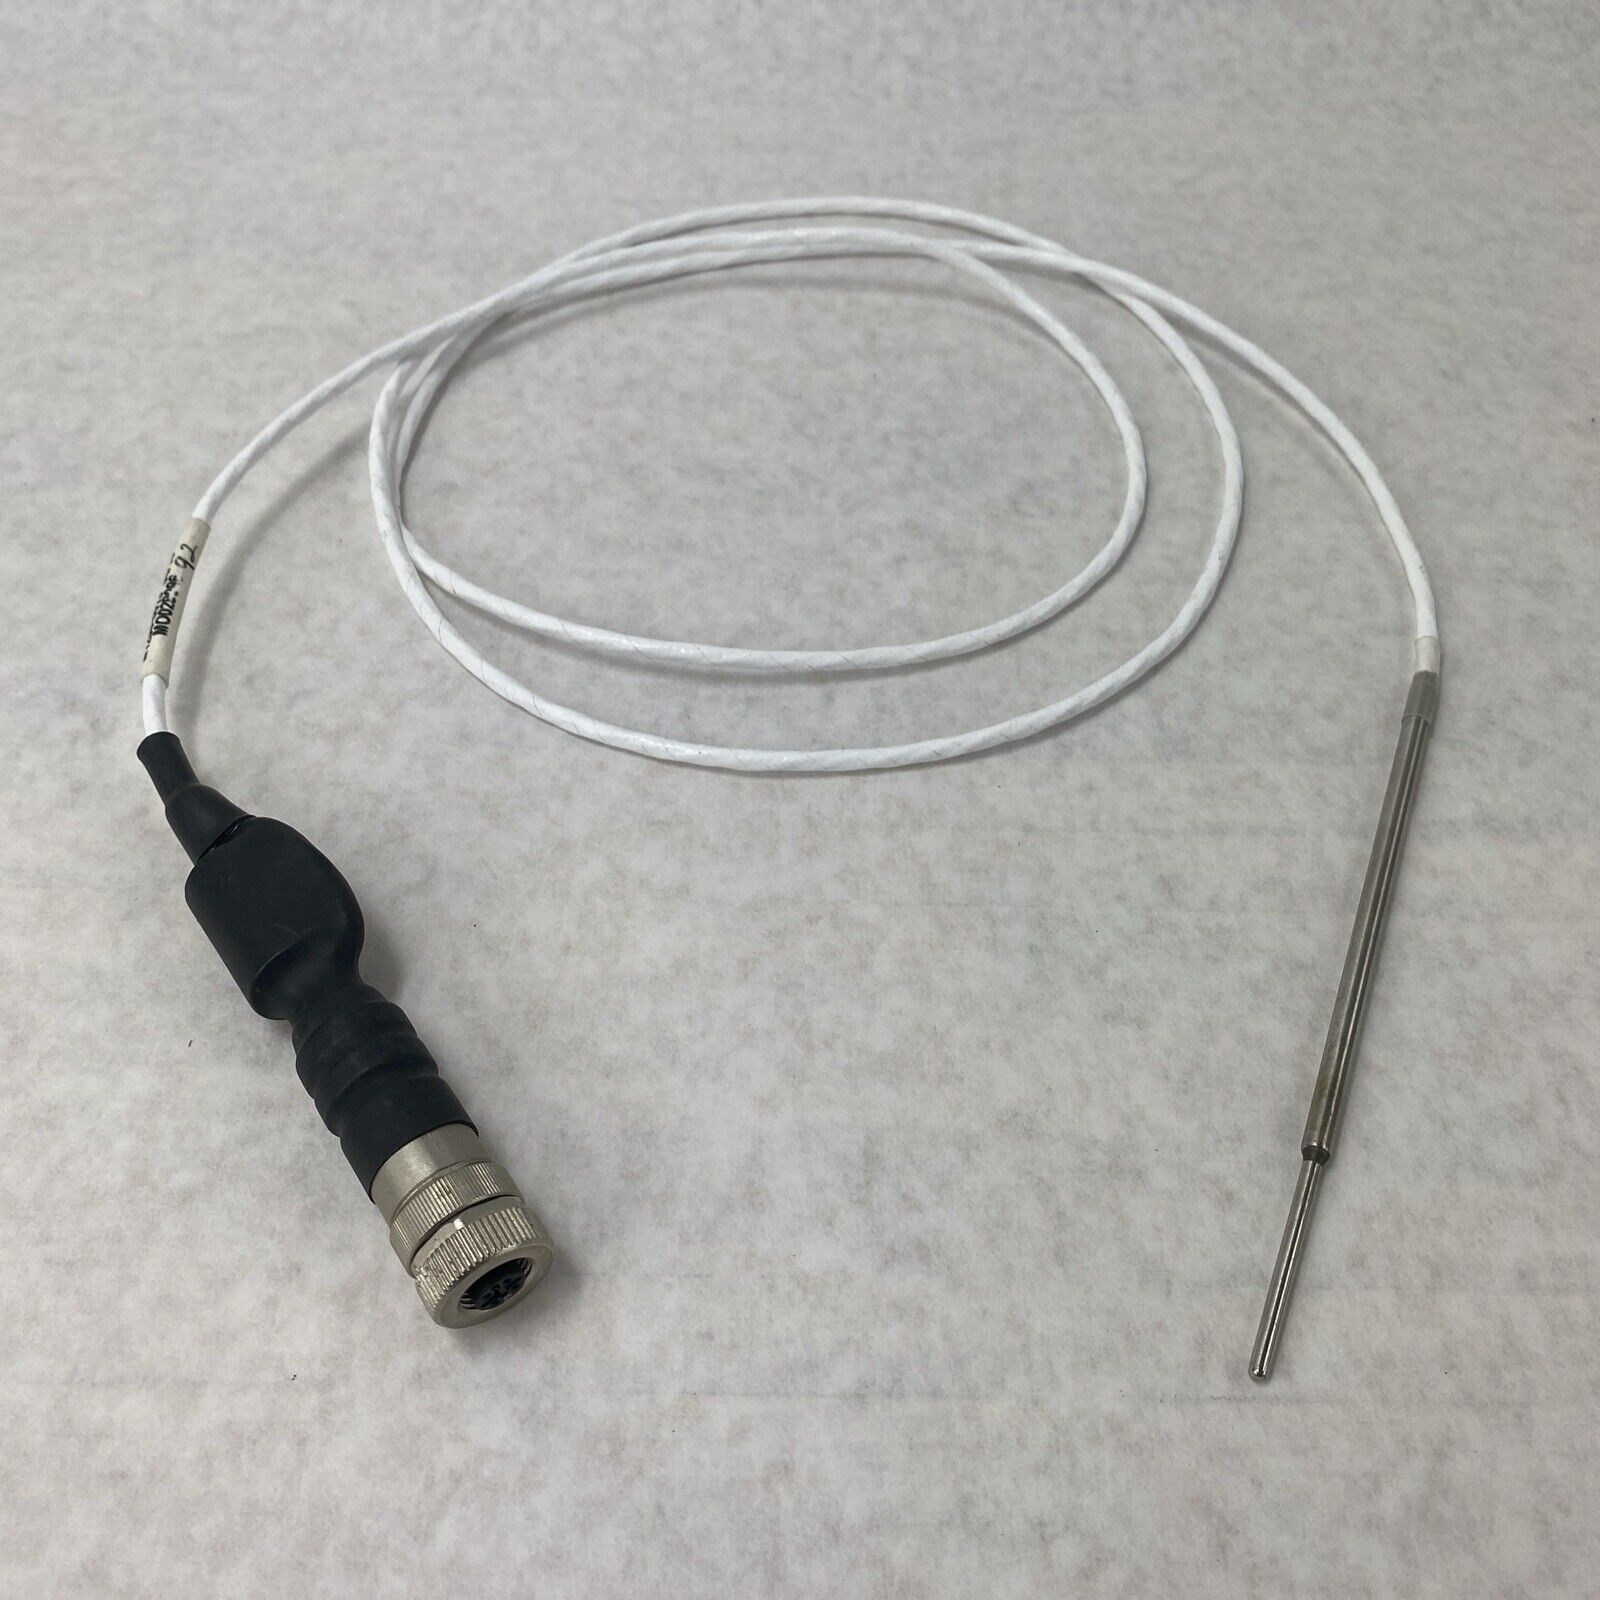 Eppendorf M1294-8013 Temperature Sensor RTD Cable